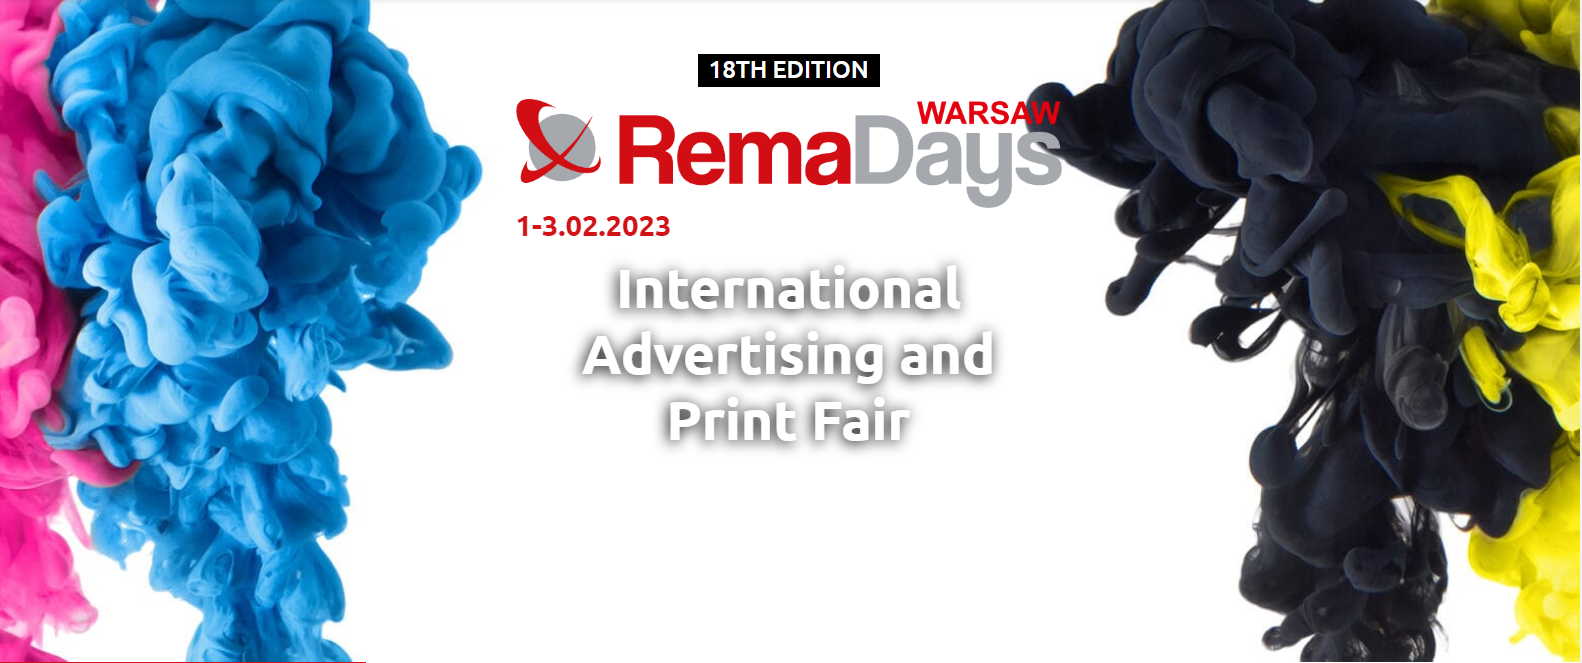 RemaDays Warsaw 2023. International Advertising and Print Fair